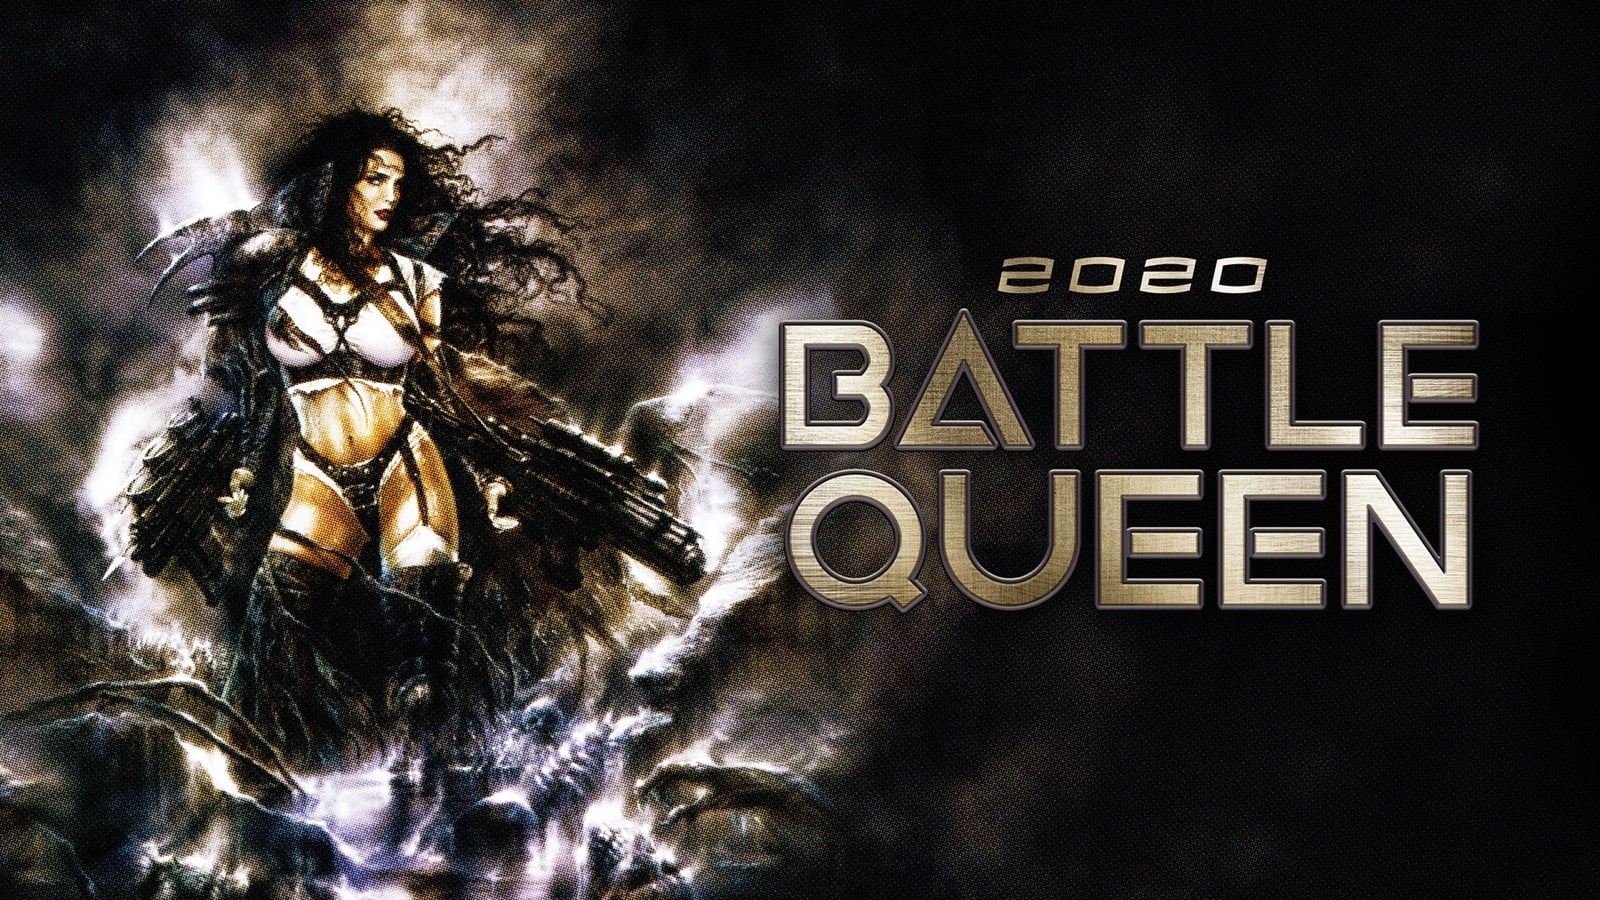 BattleQueen 2020 (2001)